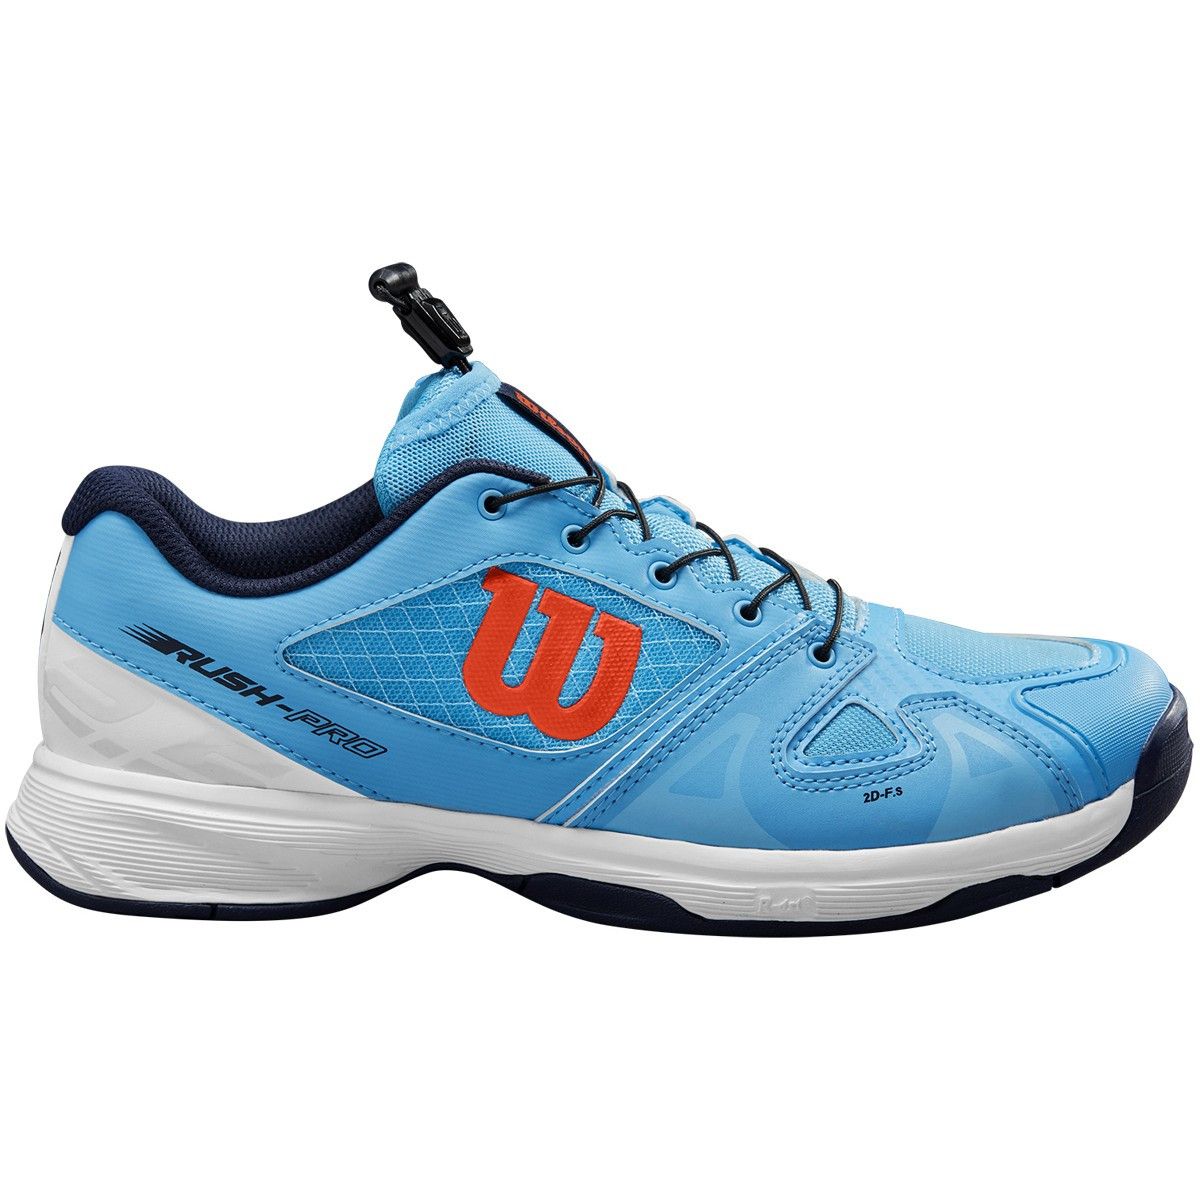 WILSON Unisex-Child Rush Pro Jr Ql Tennis Shoes